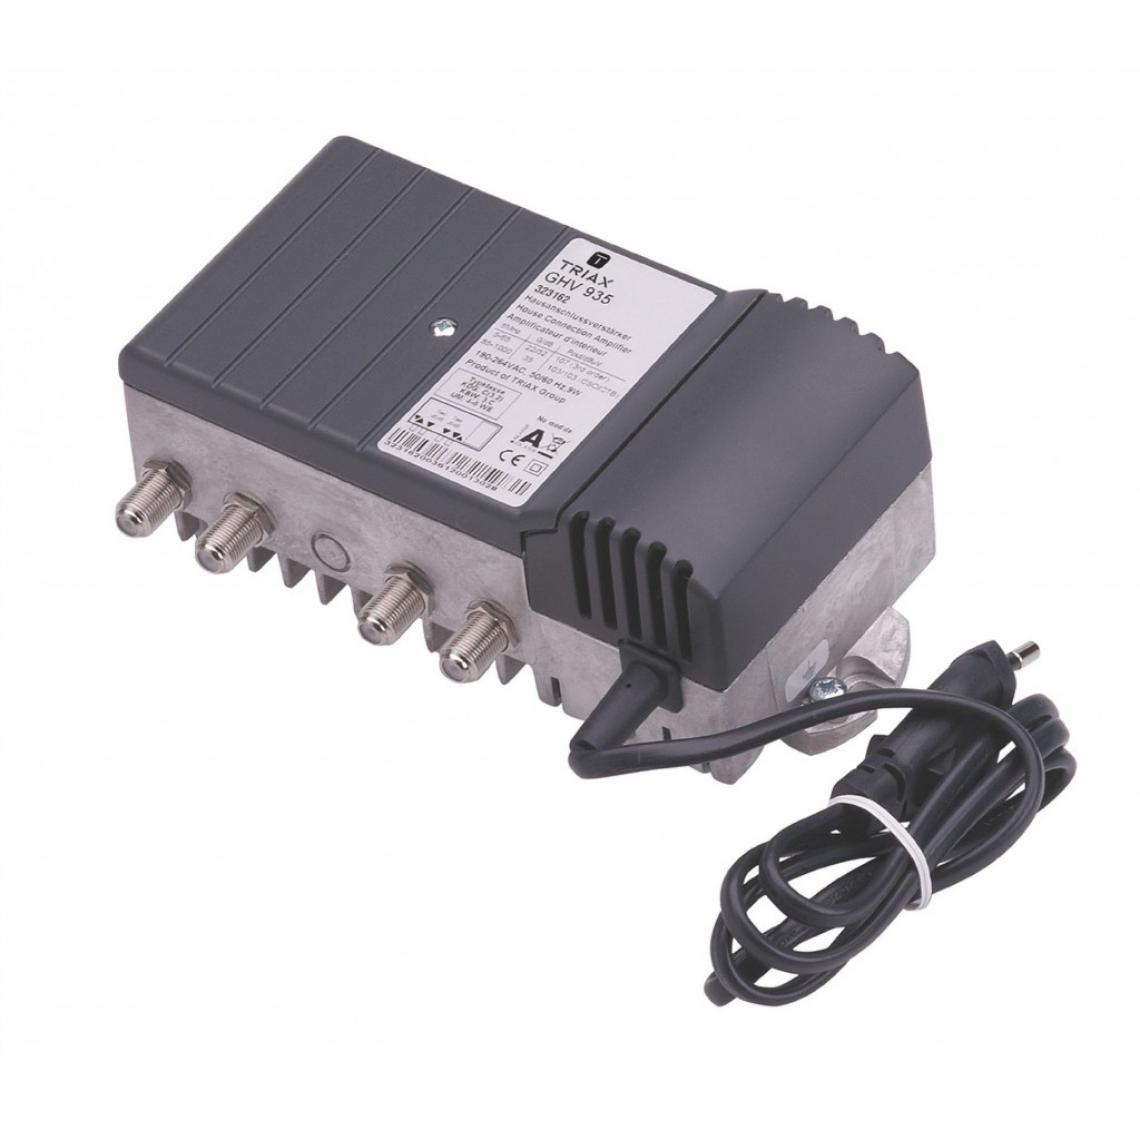 Alpexe - Amplificateur 35 dB 47-1006 MHz 1 Output - Ampli